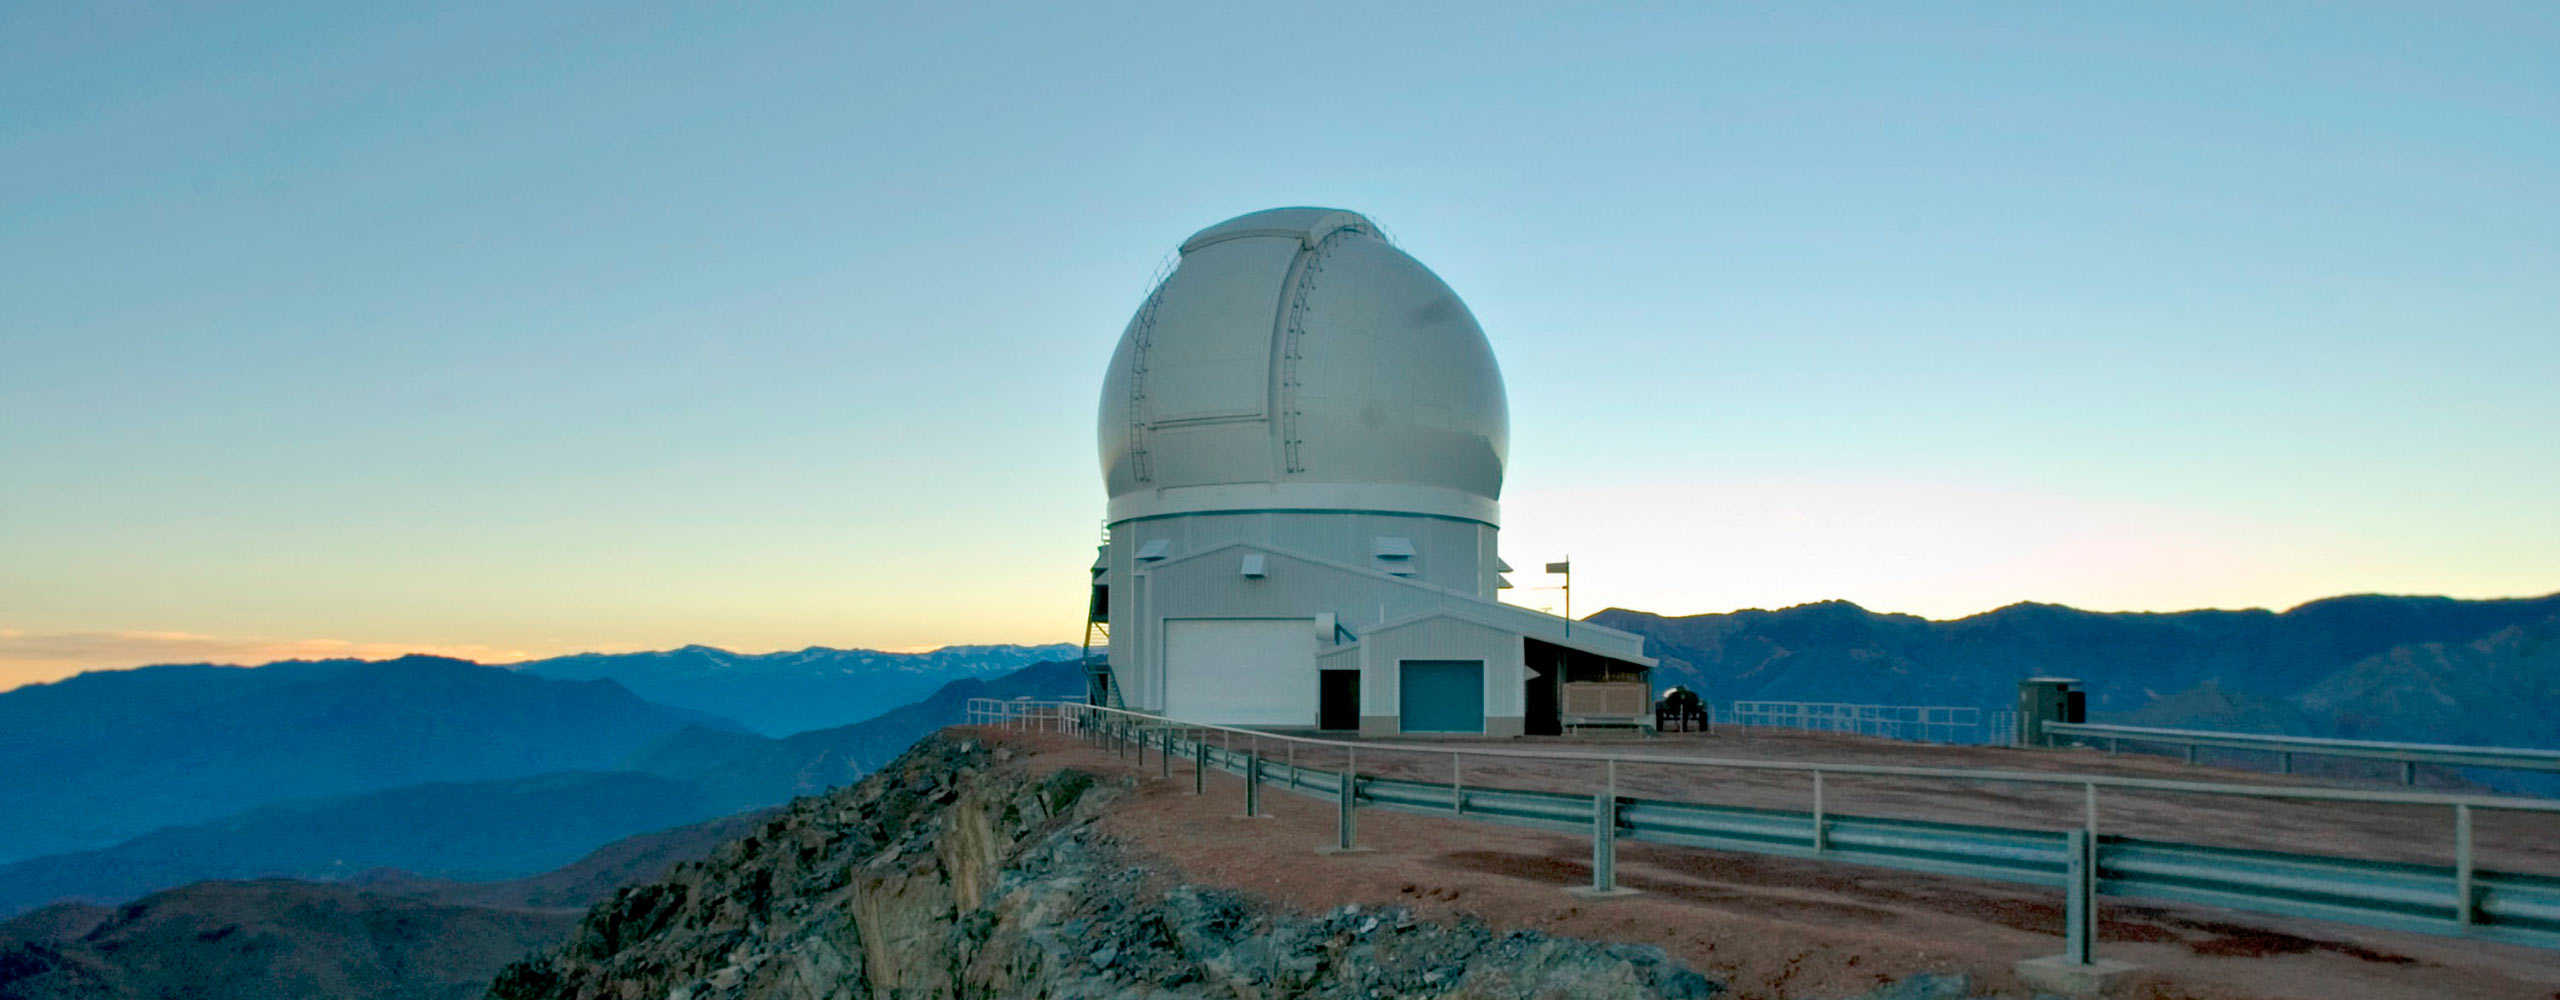 SOAR telescope at sunset